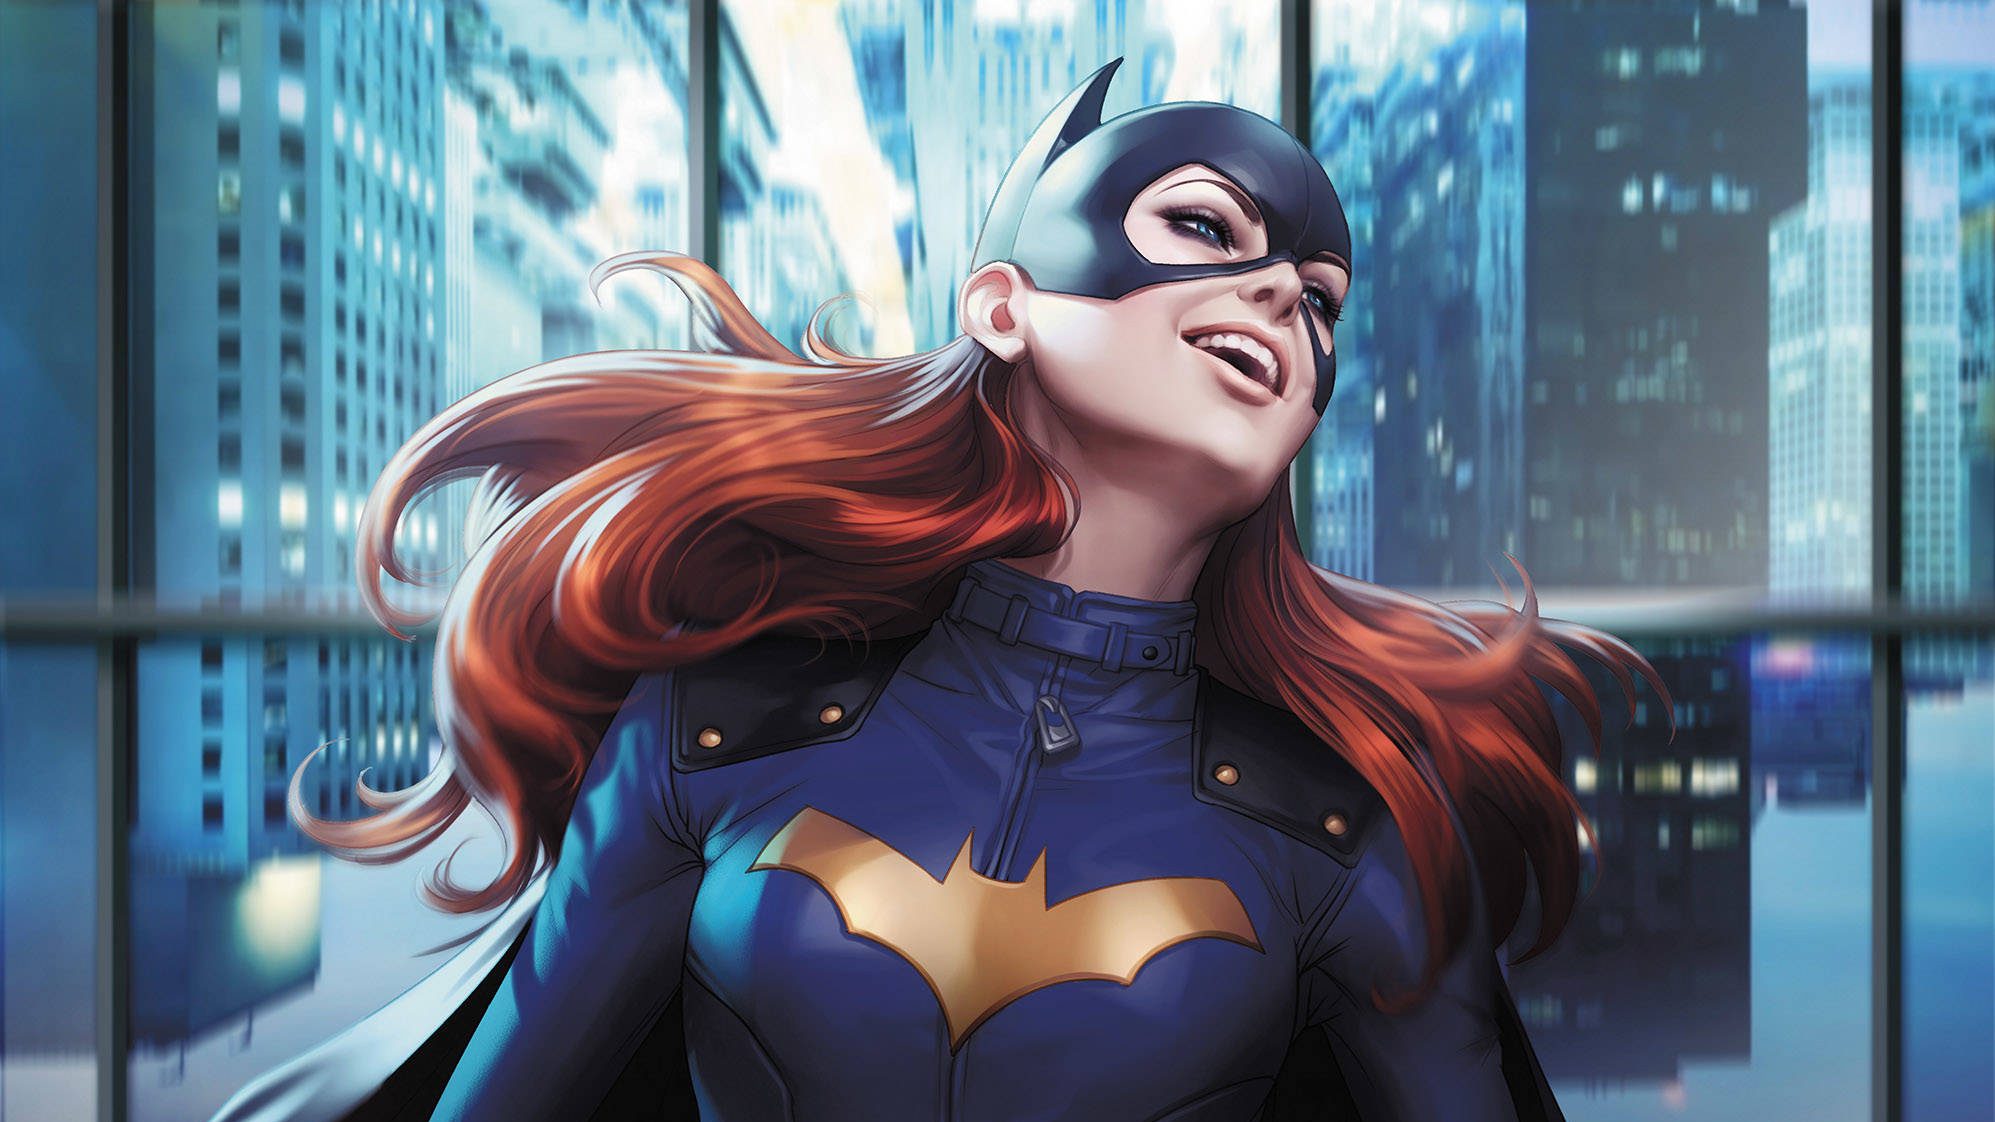 Wallpapers Batwoman superheroes work of art on the desktop